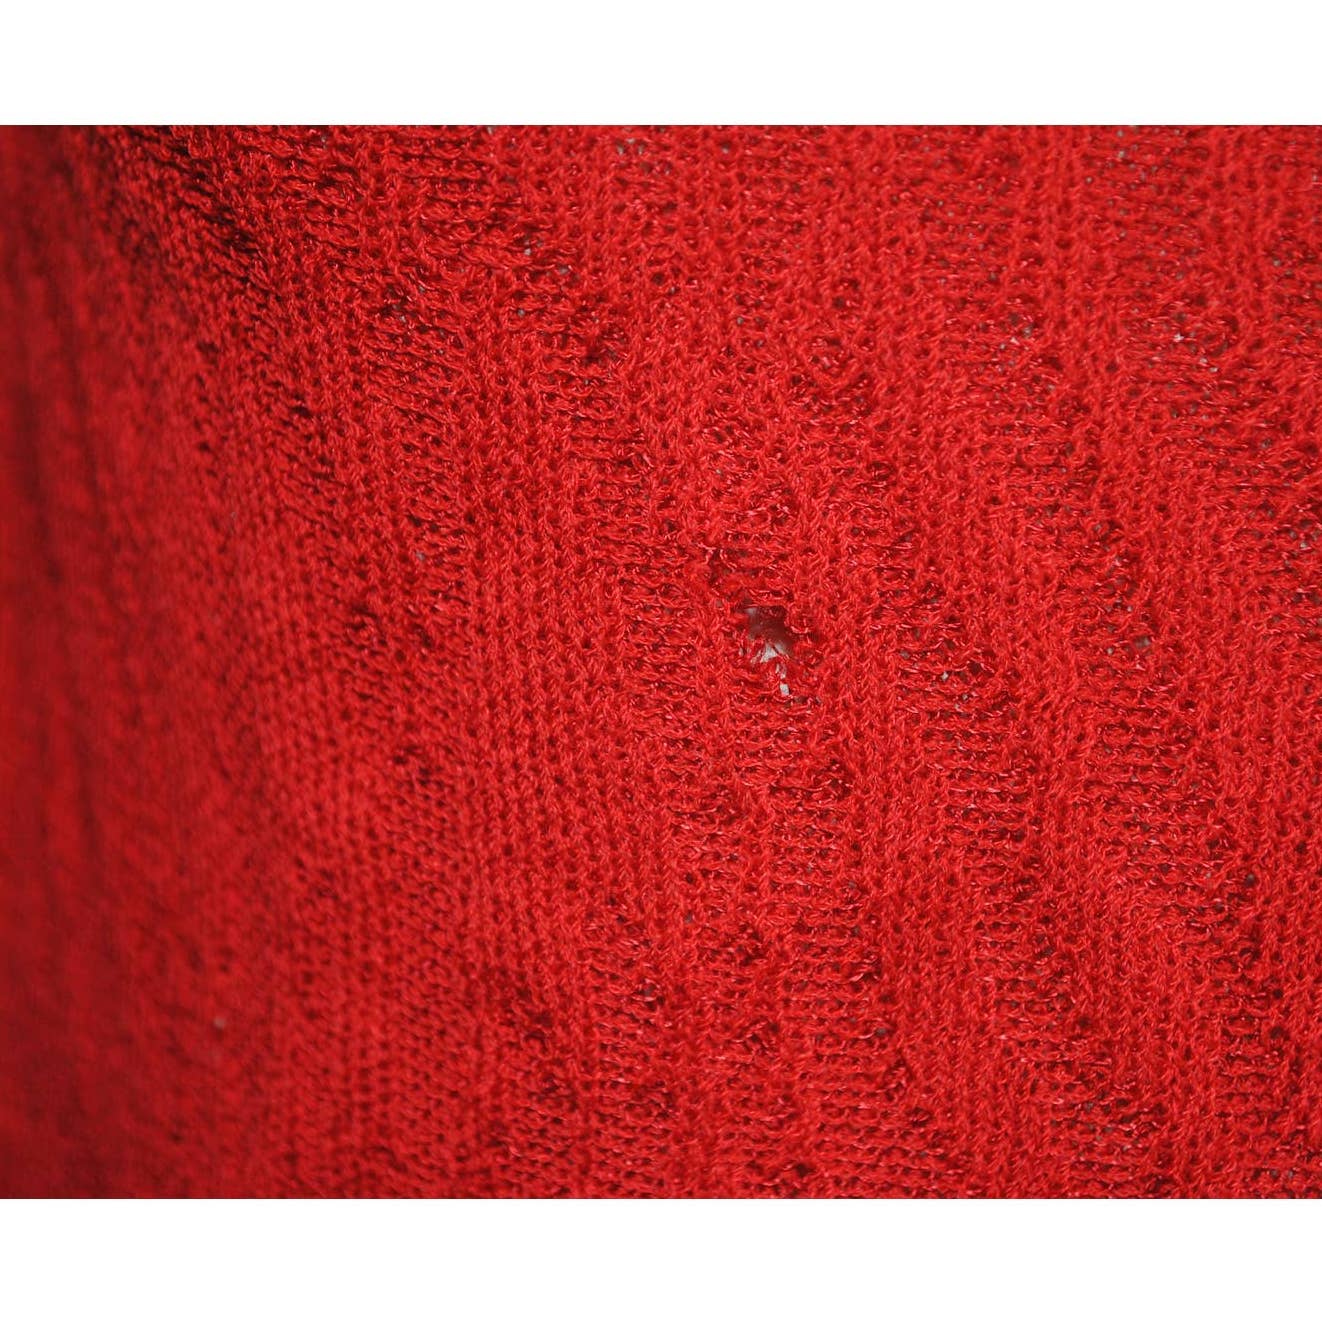 St. John Red Zebra Pattern Knit Turtleneck Sleeveless Top- P (S)